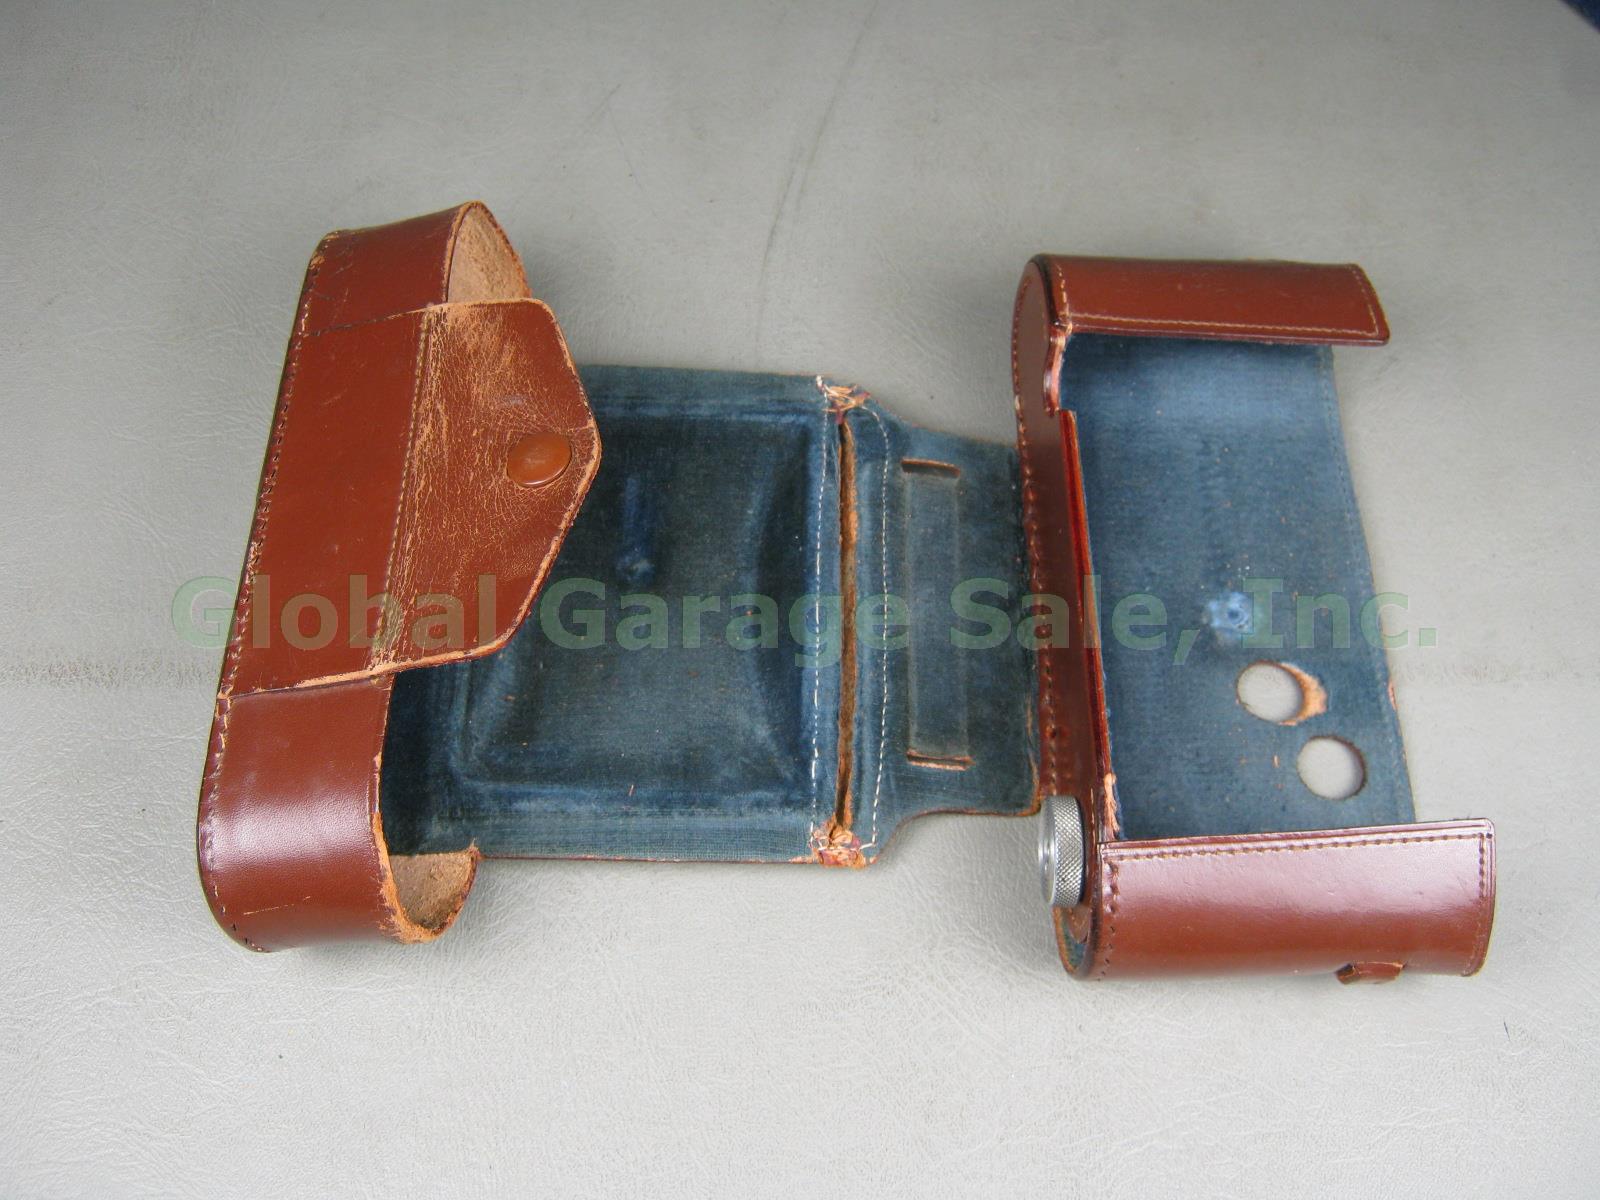 Vintage Voigtlander Bessa II Rangefinder Camera Leather Case Original Box Bundle 15